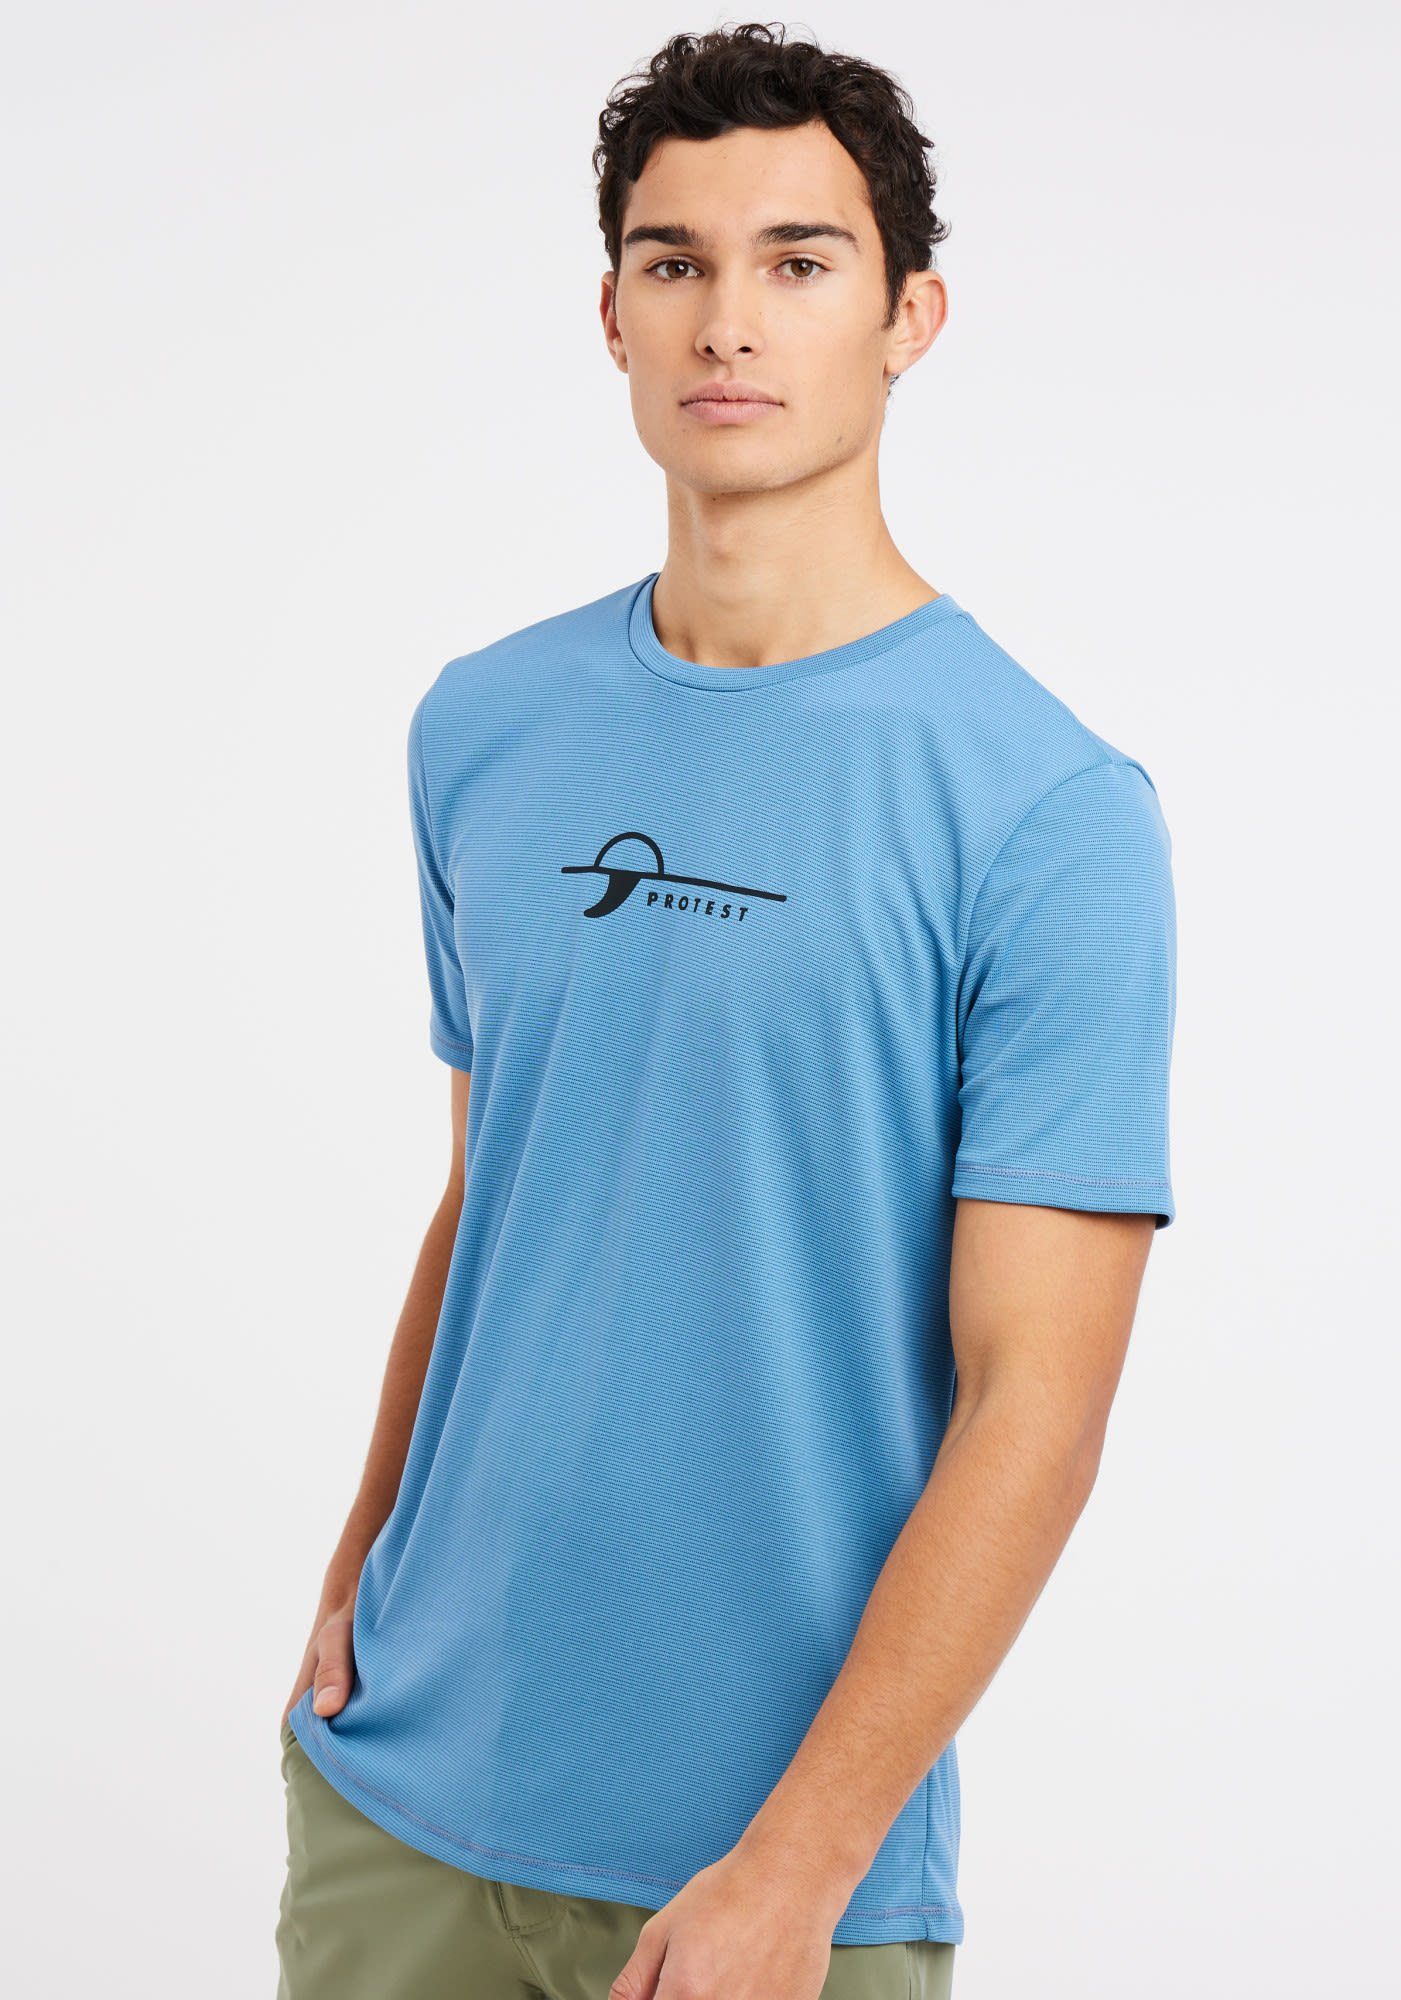 Protest River T-Shirt M T-shirt Blue Prtlegundi Surf Herren Protest